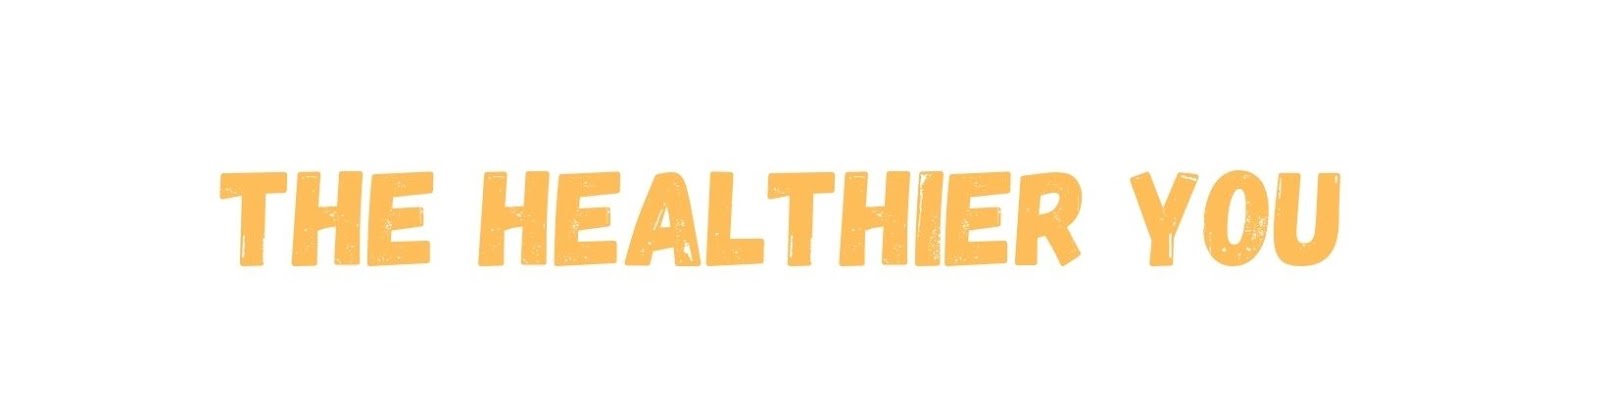 THE HEALTHIER YOU